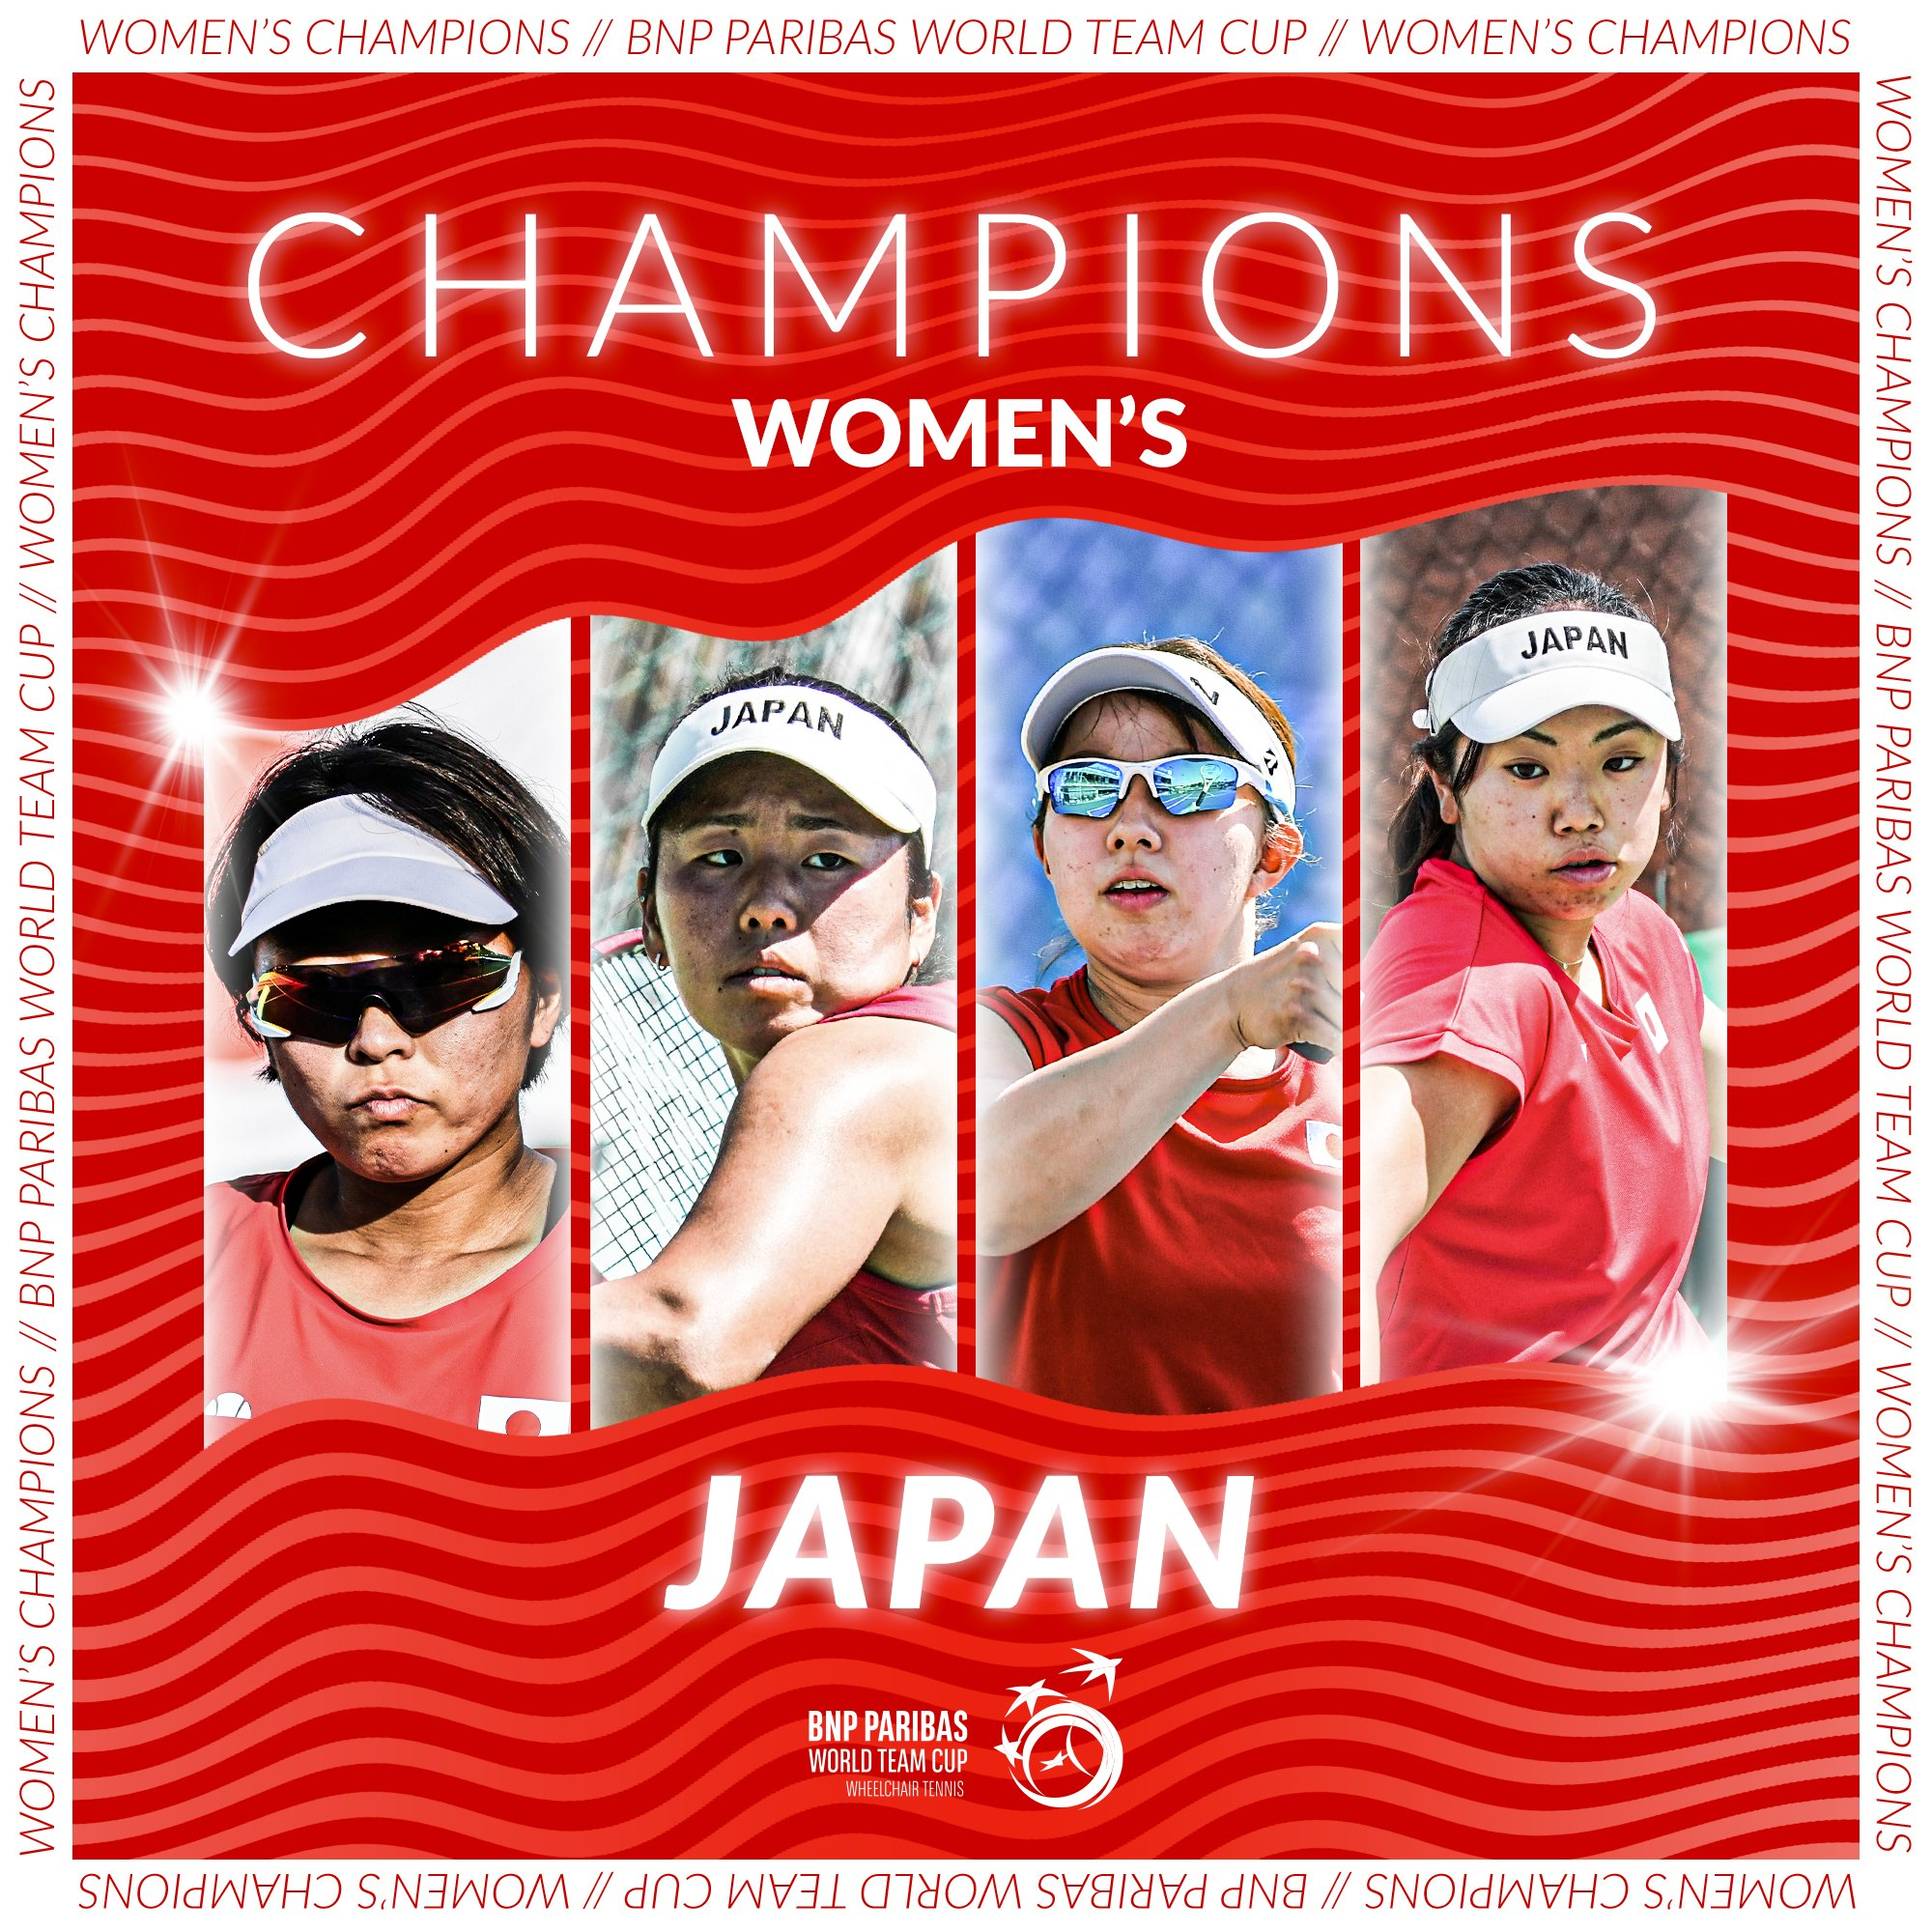 Japan win maiden women's title at Wheelchair Tennis World Team Cup